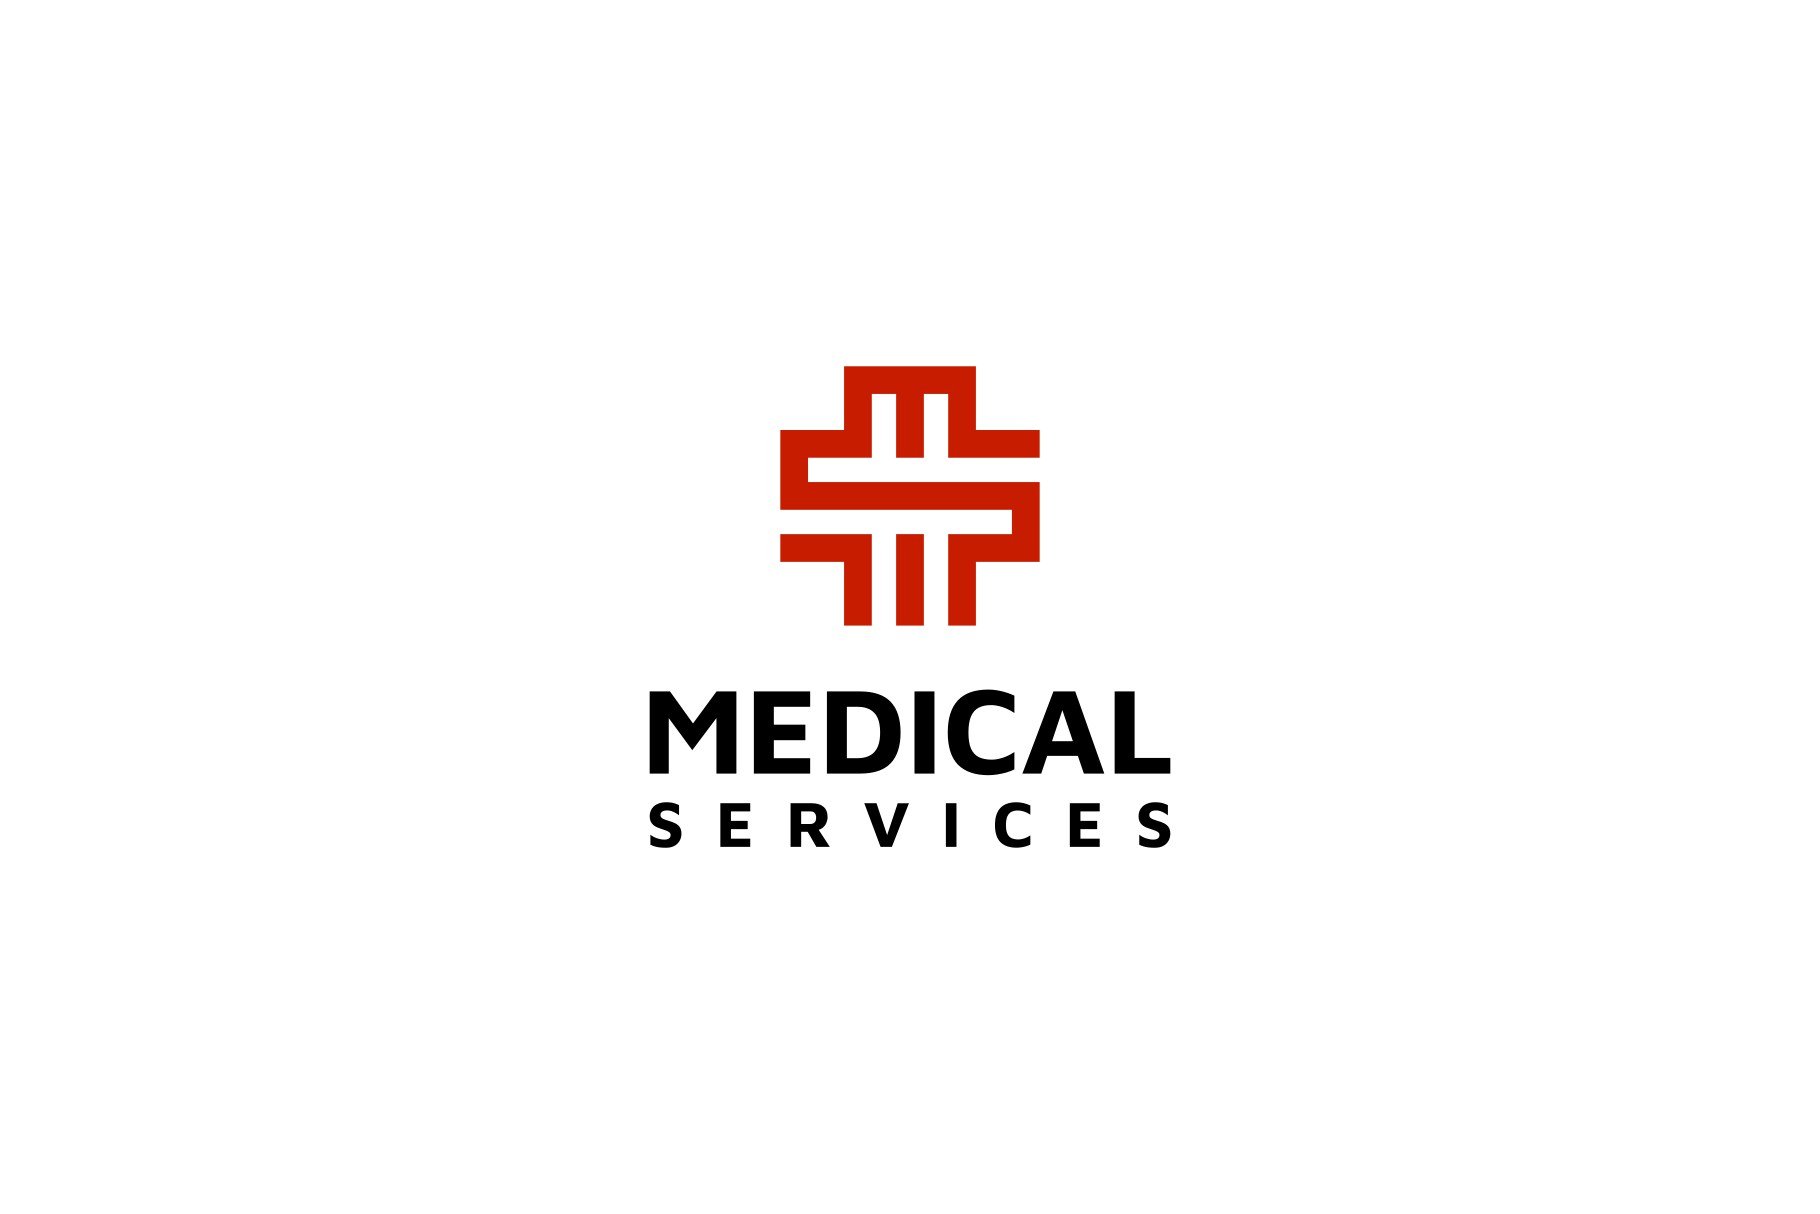 MS initial medical symbol logo cover image.